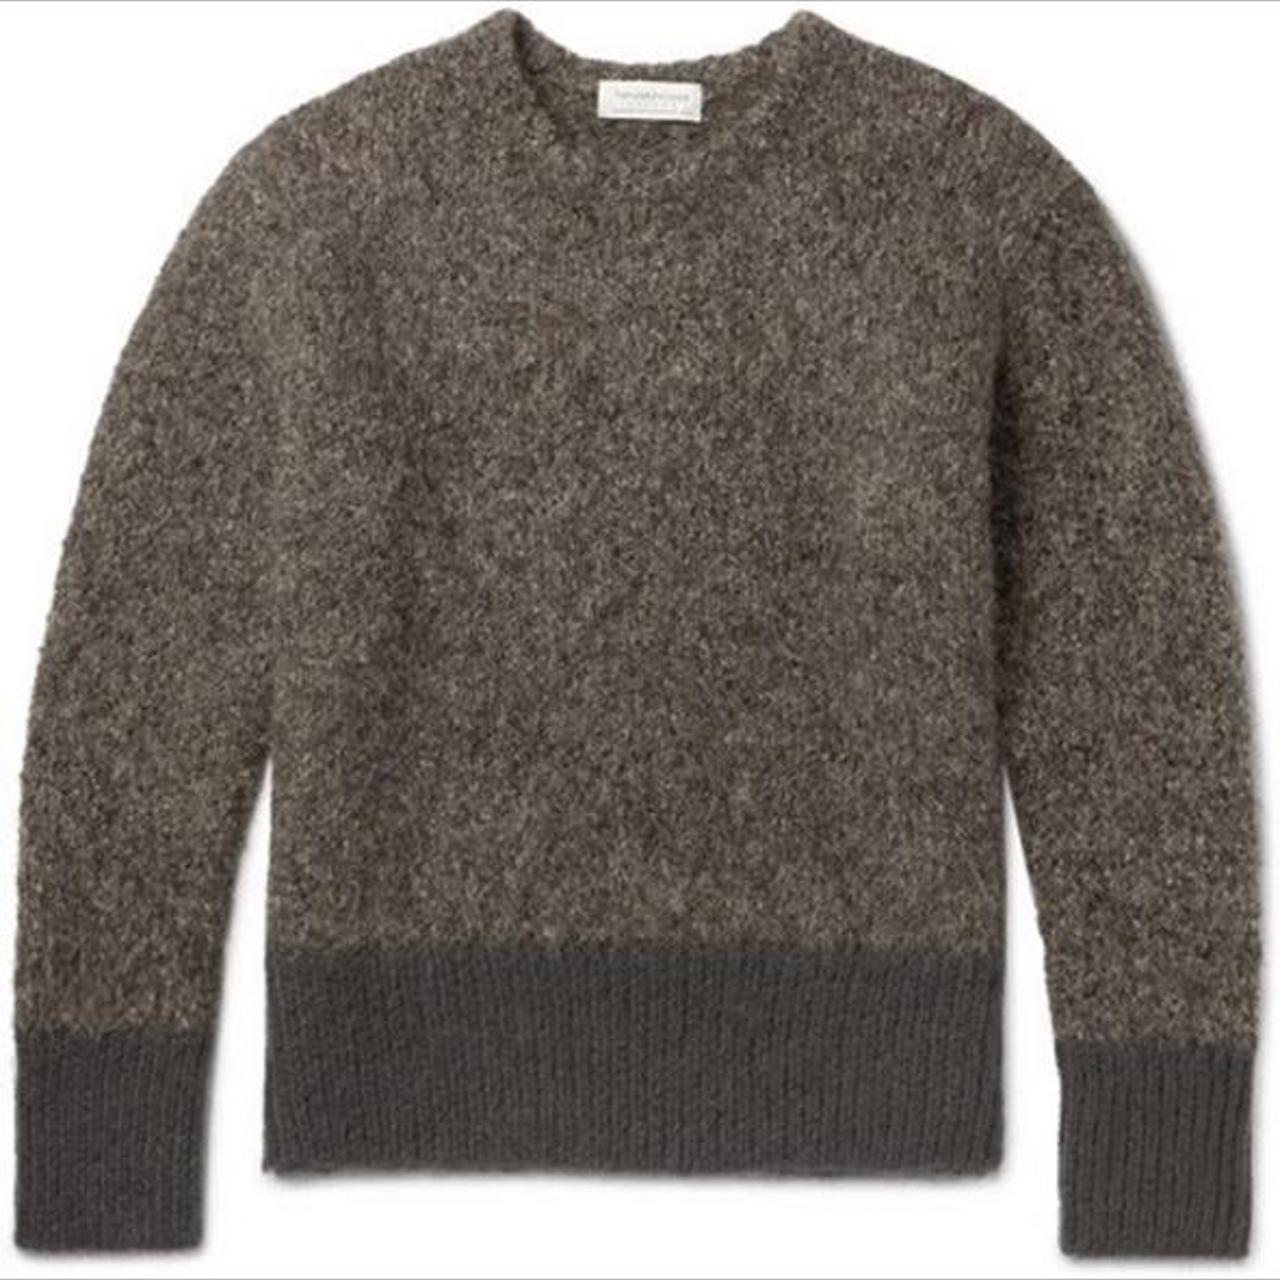 Product Image 1 - Tomorrowland Mélange Alpaca-blend Sweater

Size: S

Designed